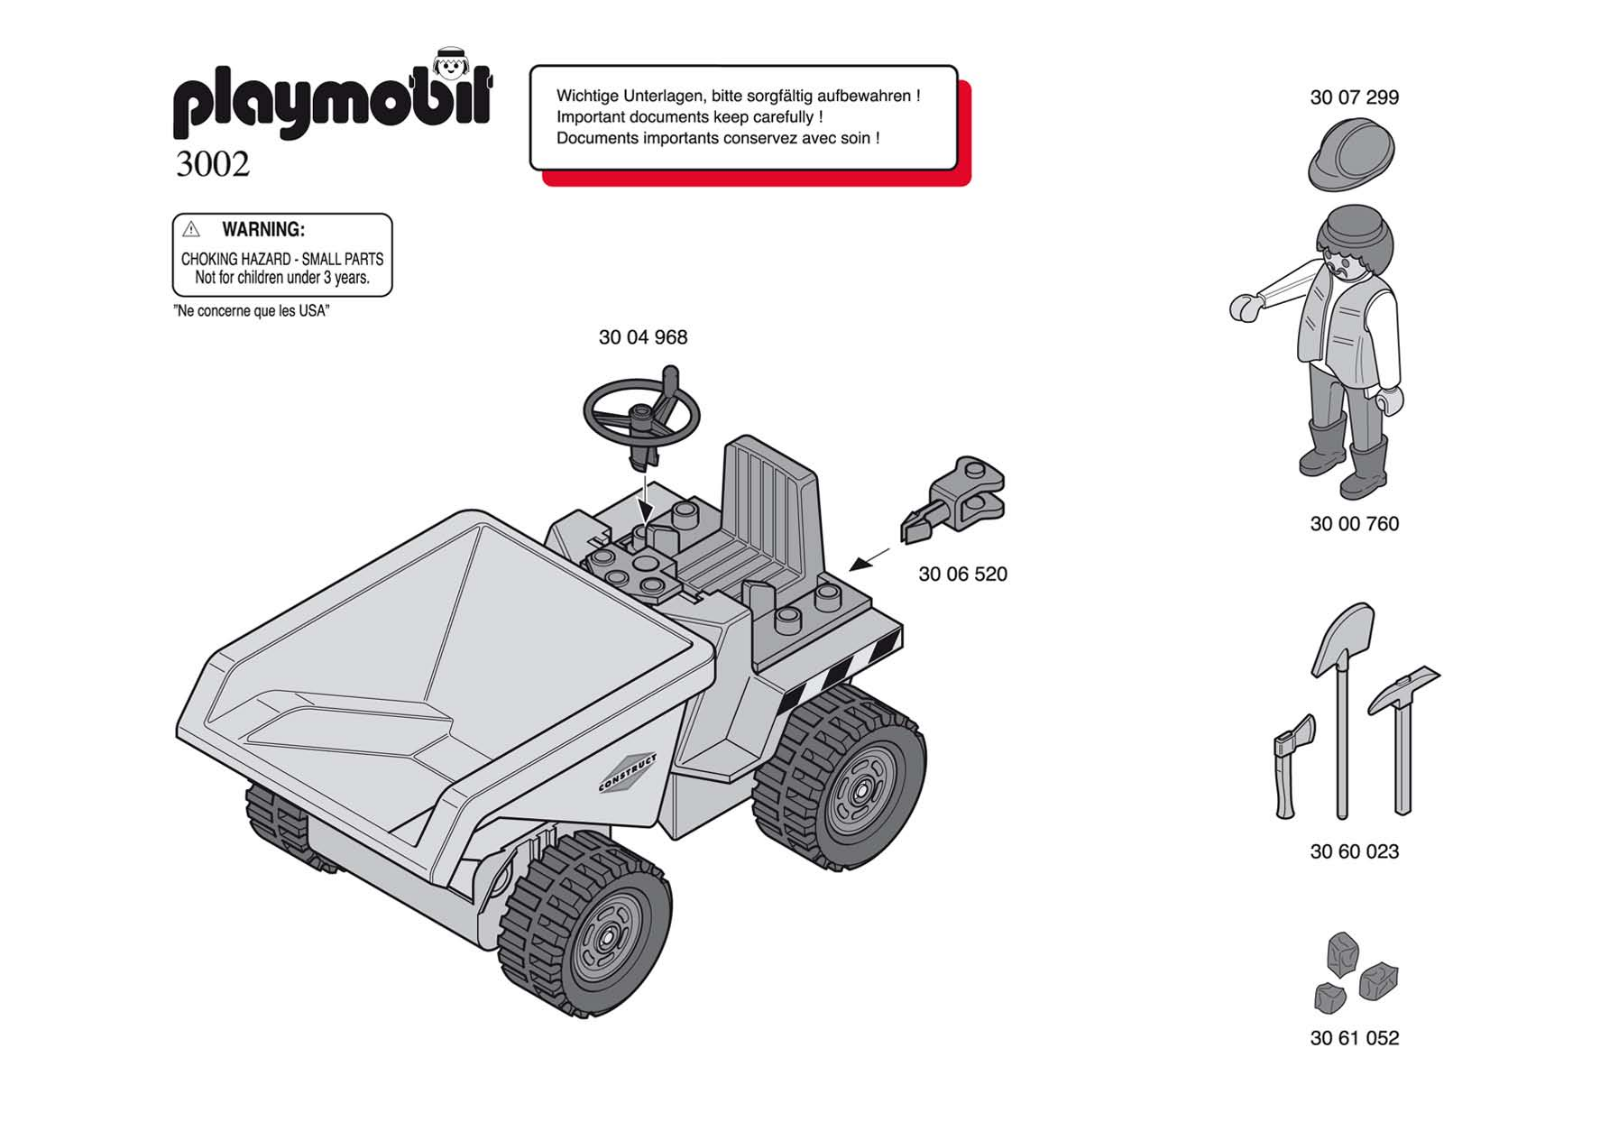 Playmobil 3002 Instructions